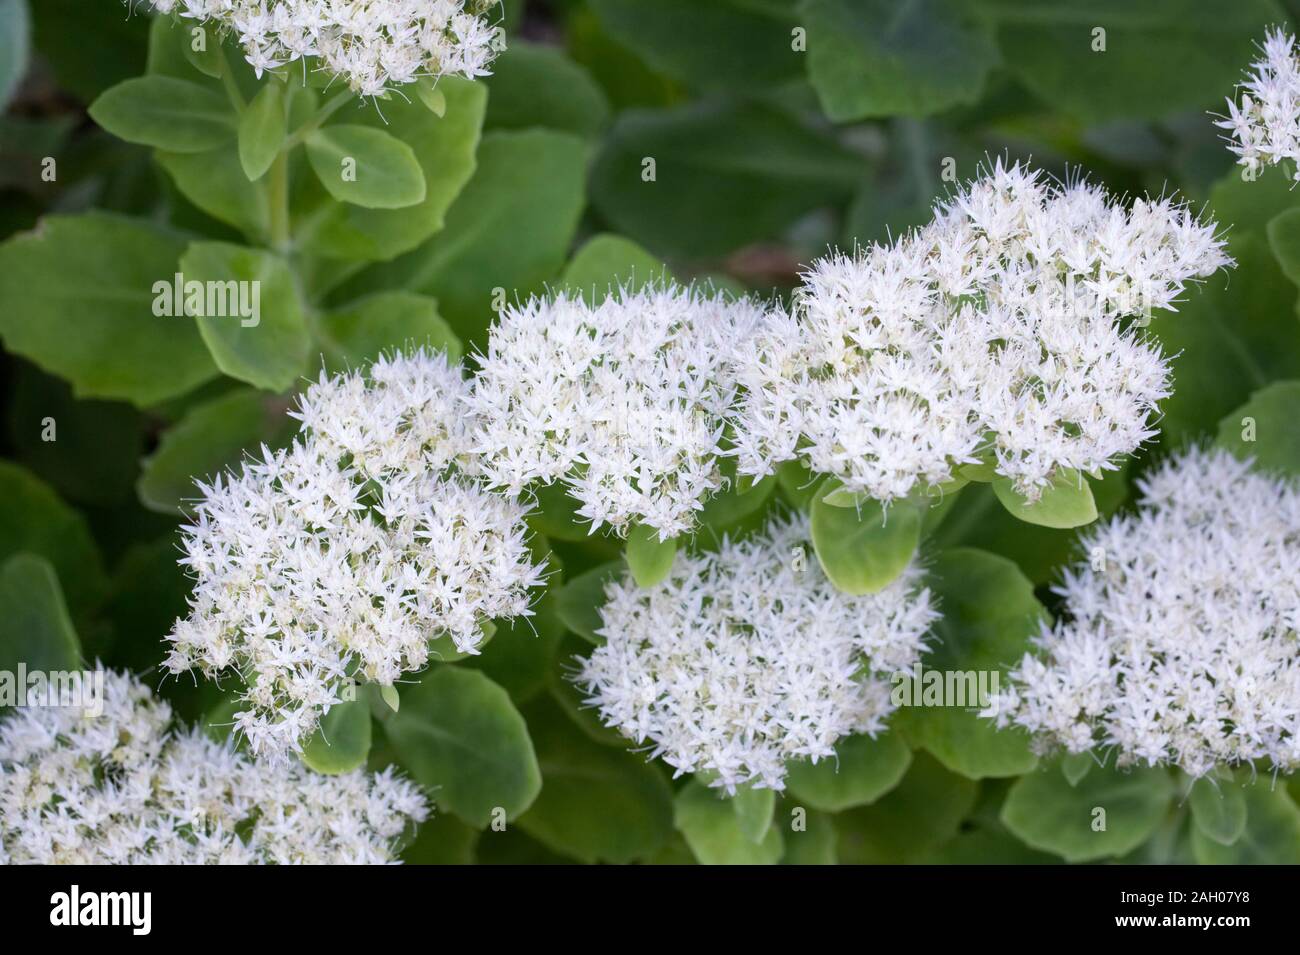 White Hylotelephium flowers in the garden. Sedum flowering. Stock Photo